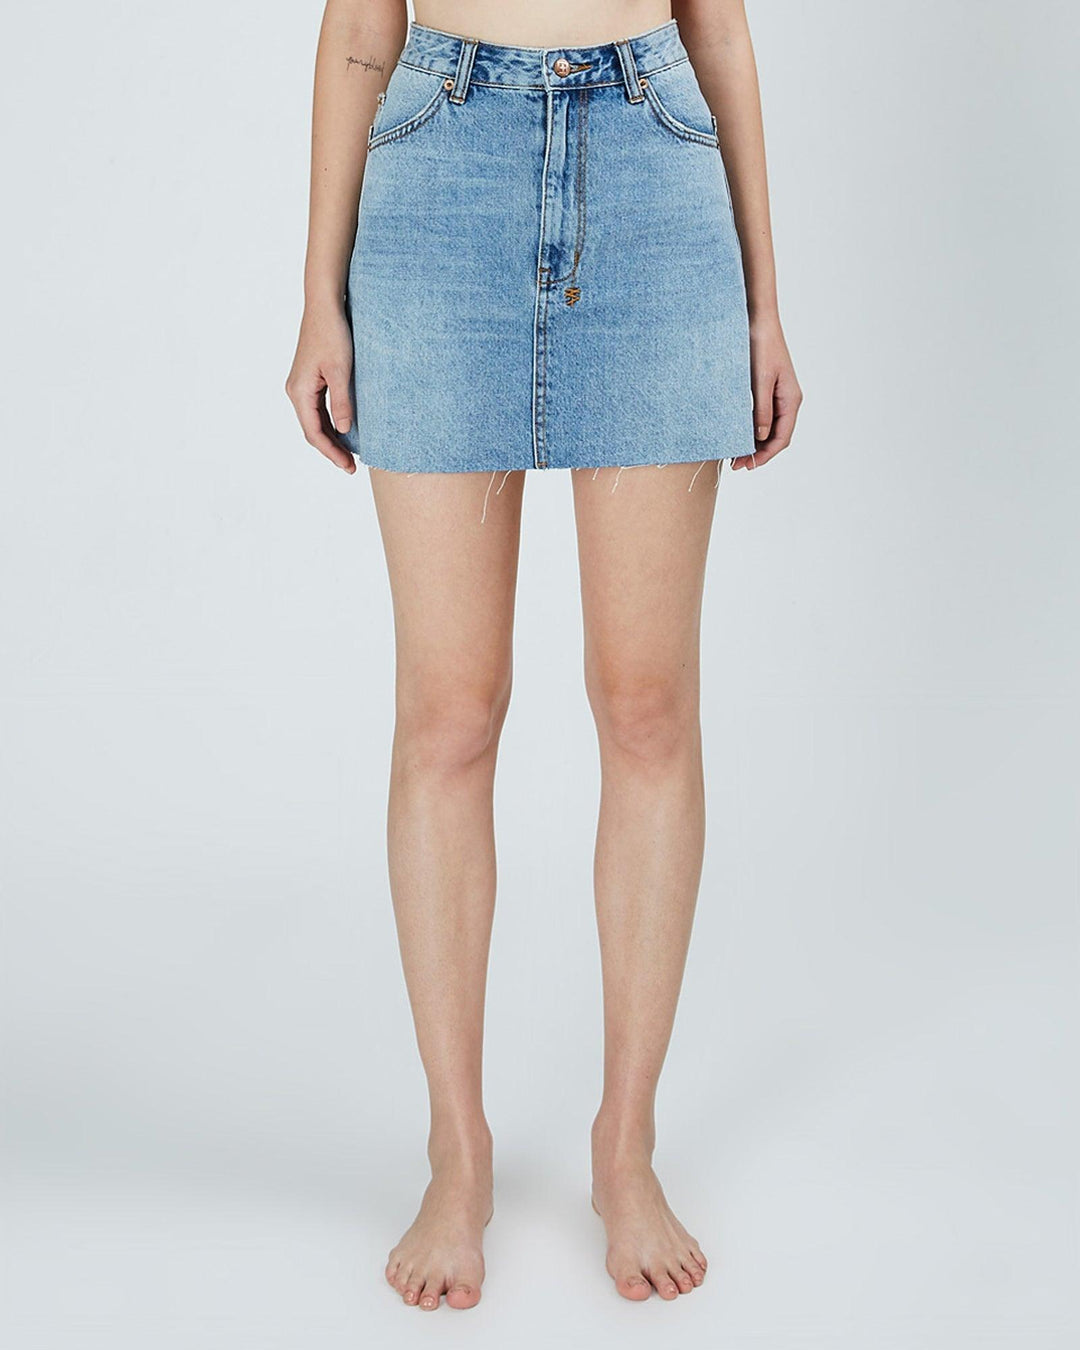 Ksubi 'Hi Line Mini' Distressed Denim Skirt - Size 24 - Jean Pool